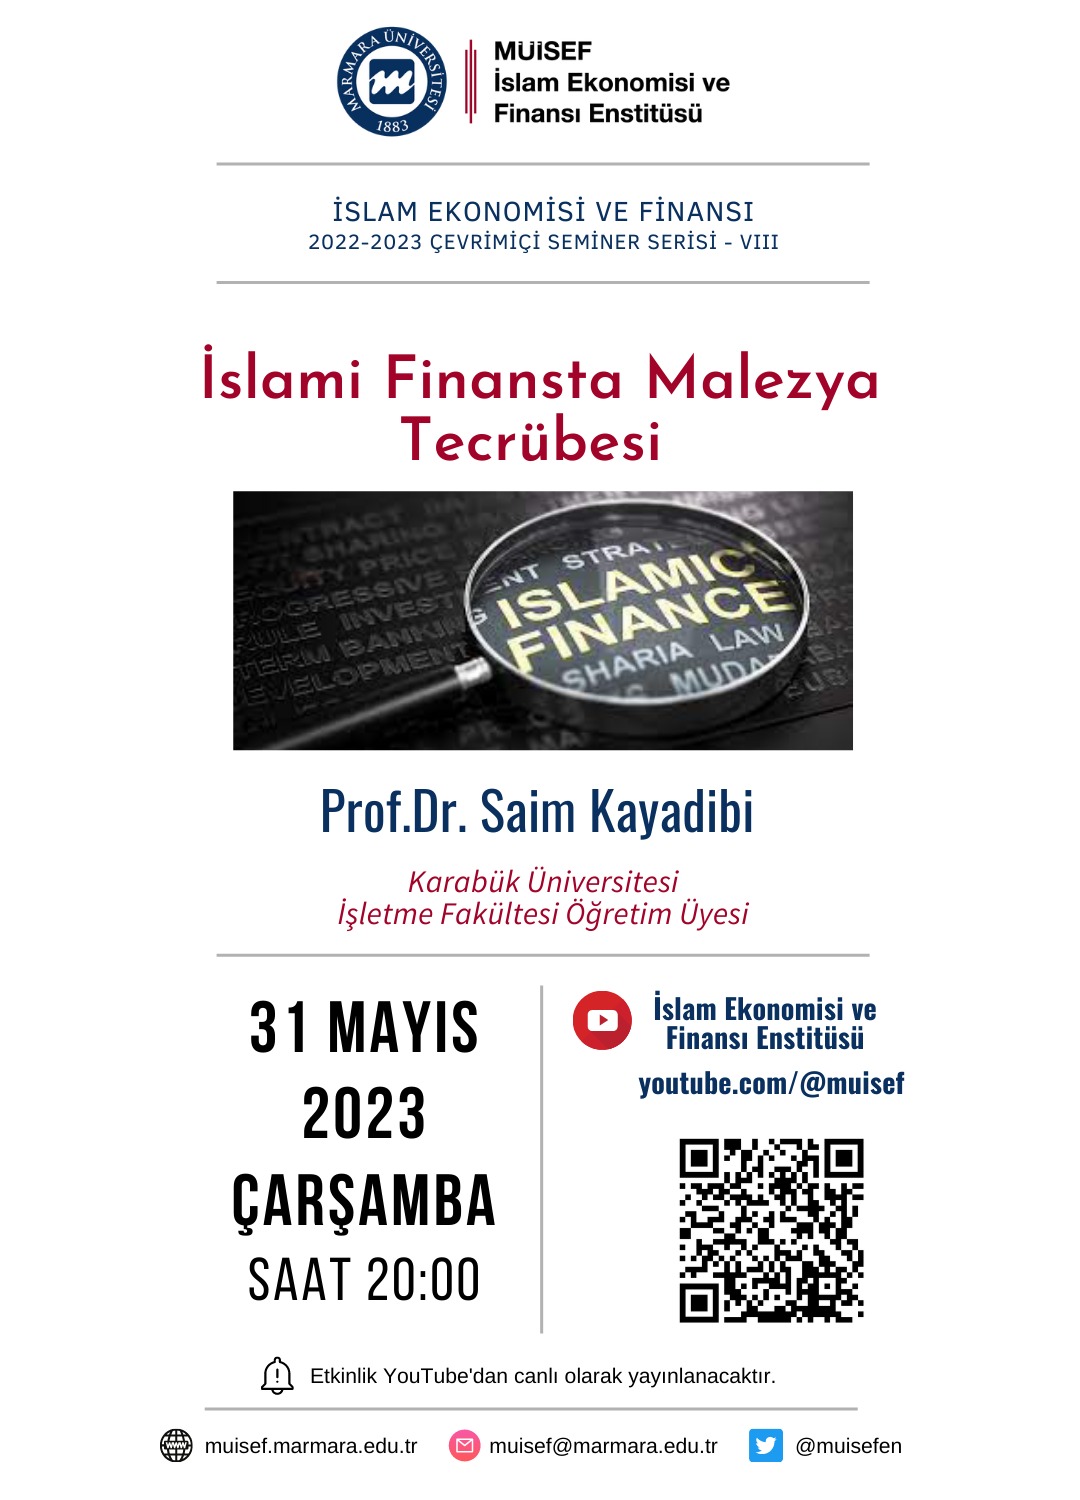 İslami-finansta-malezya-tecrübesi.jpeg (209 KB)